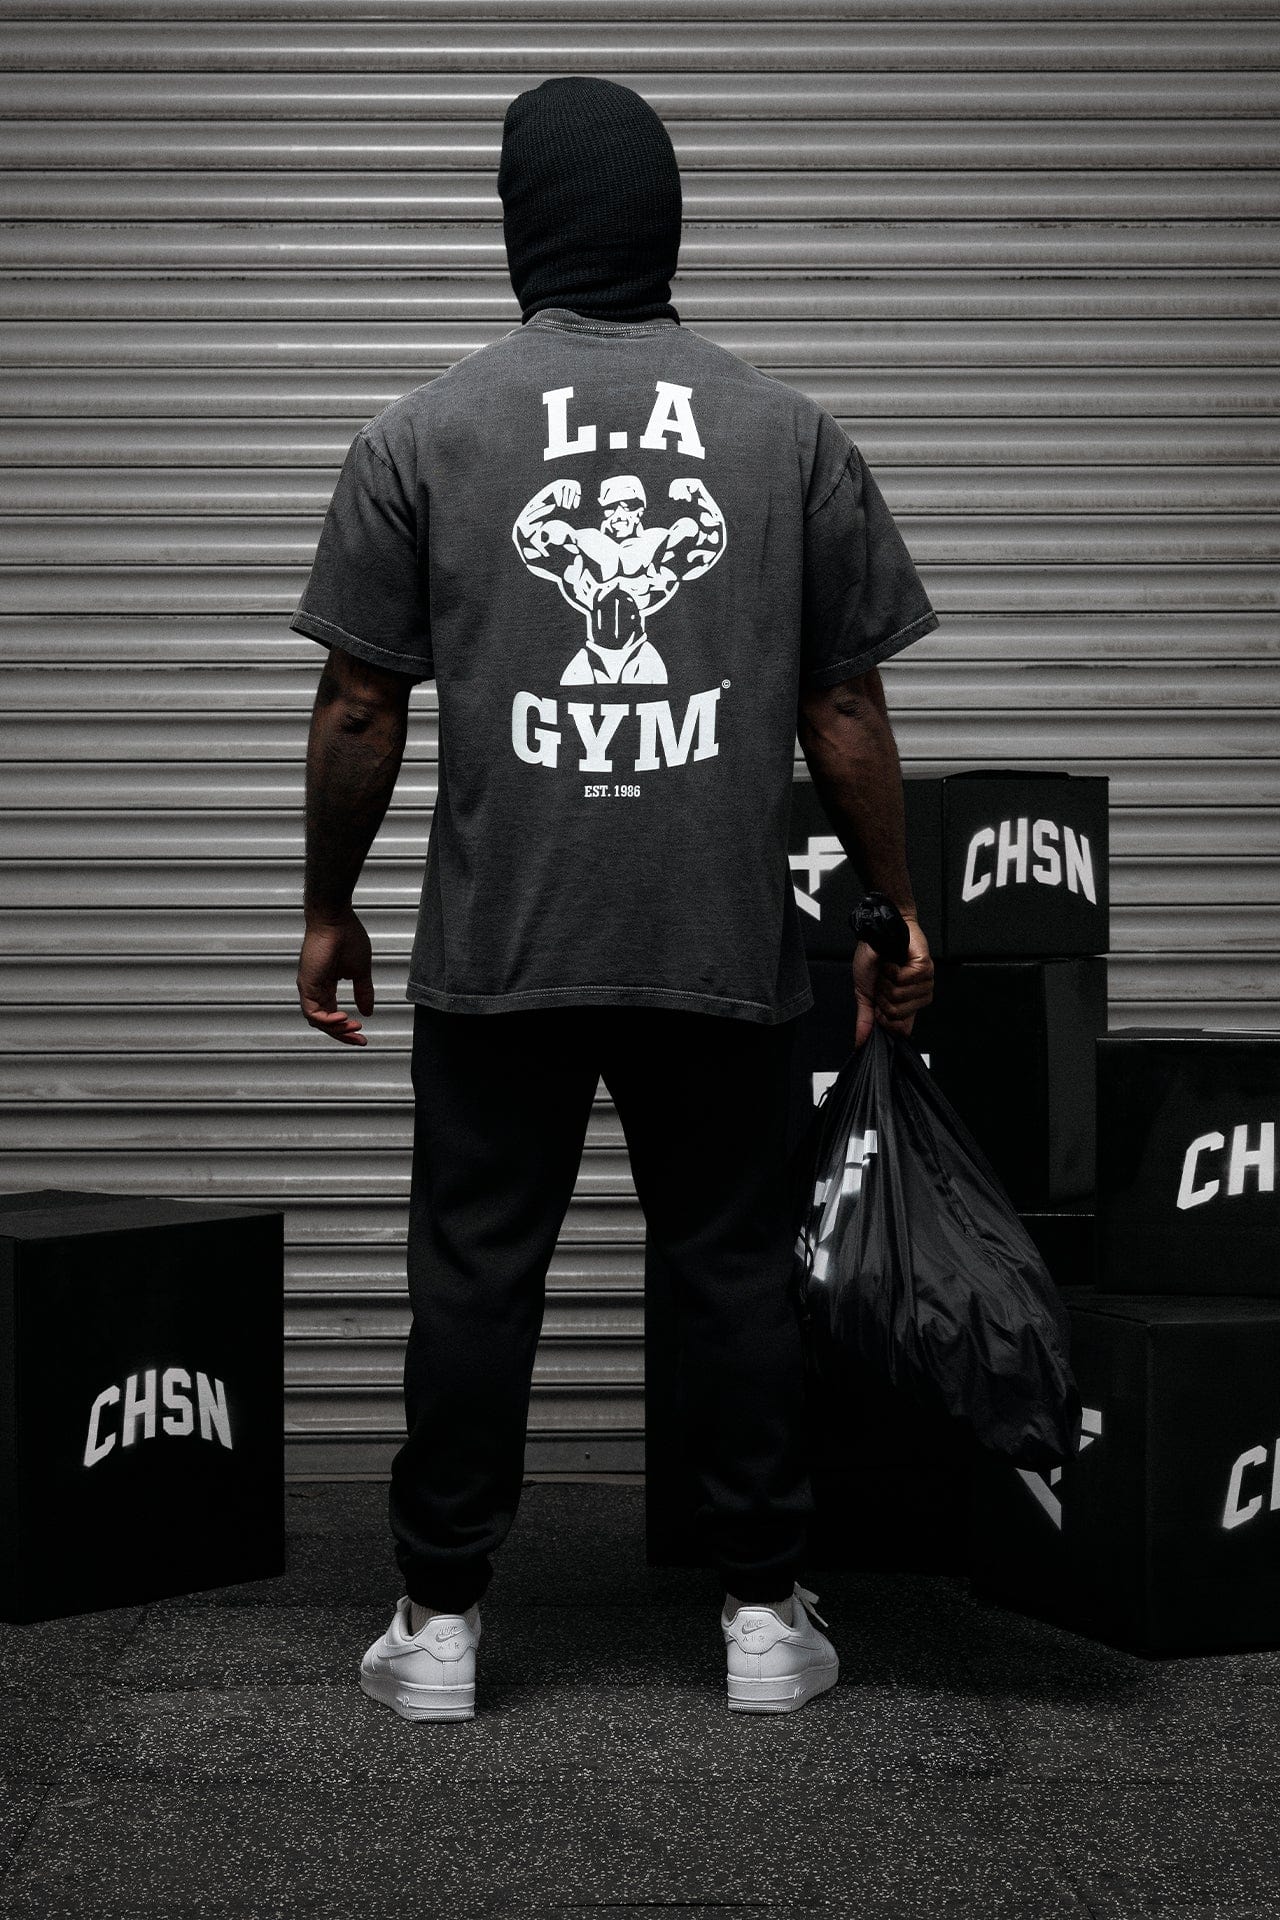 L.A Gym Official Tee Retro Black & Vintage White